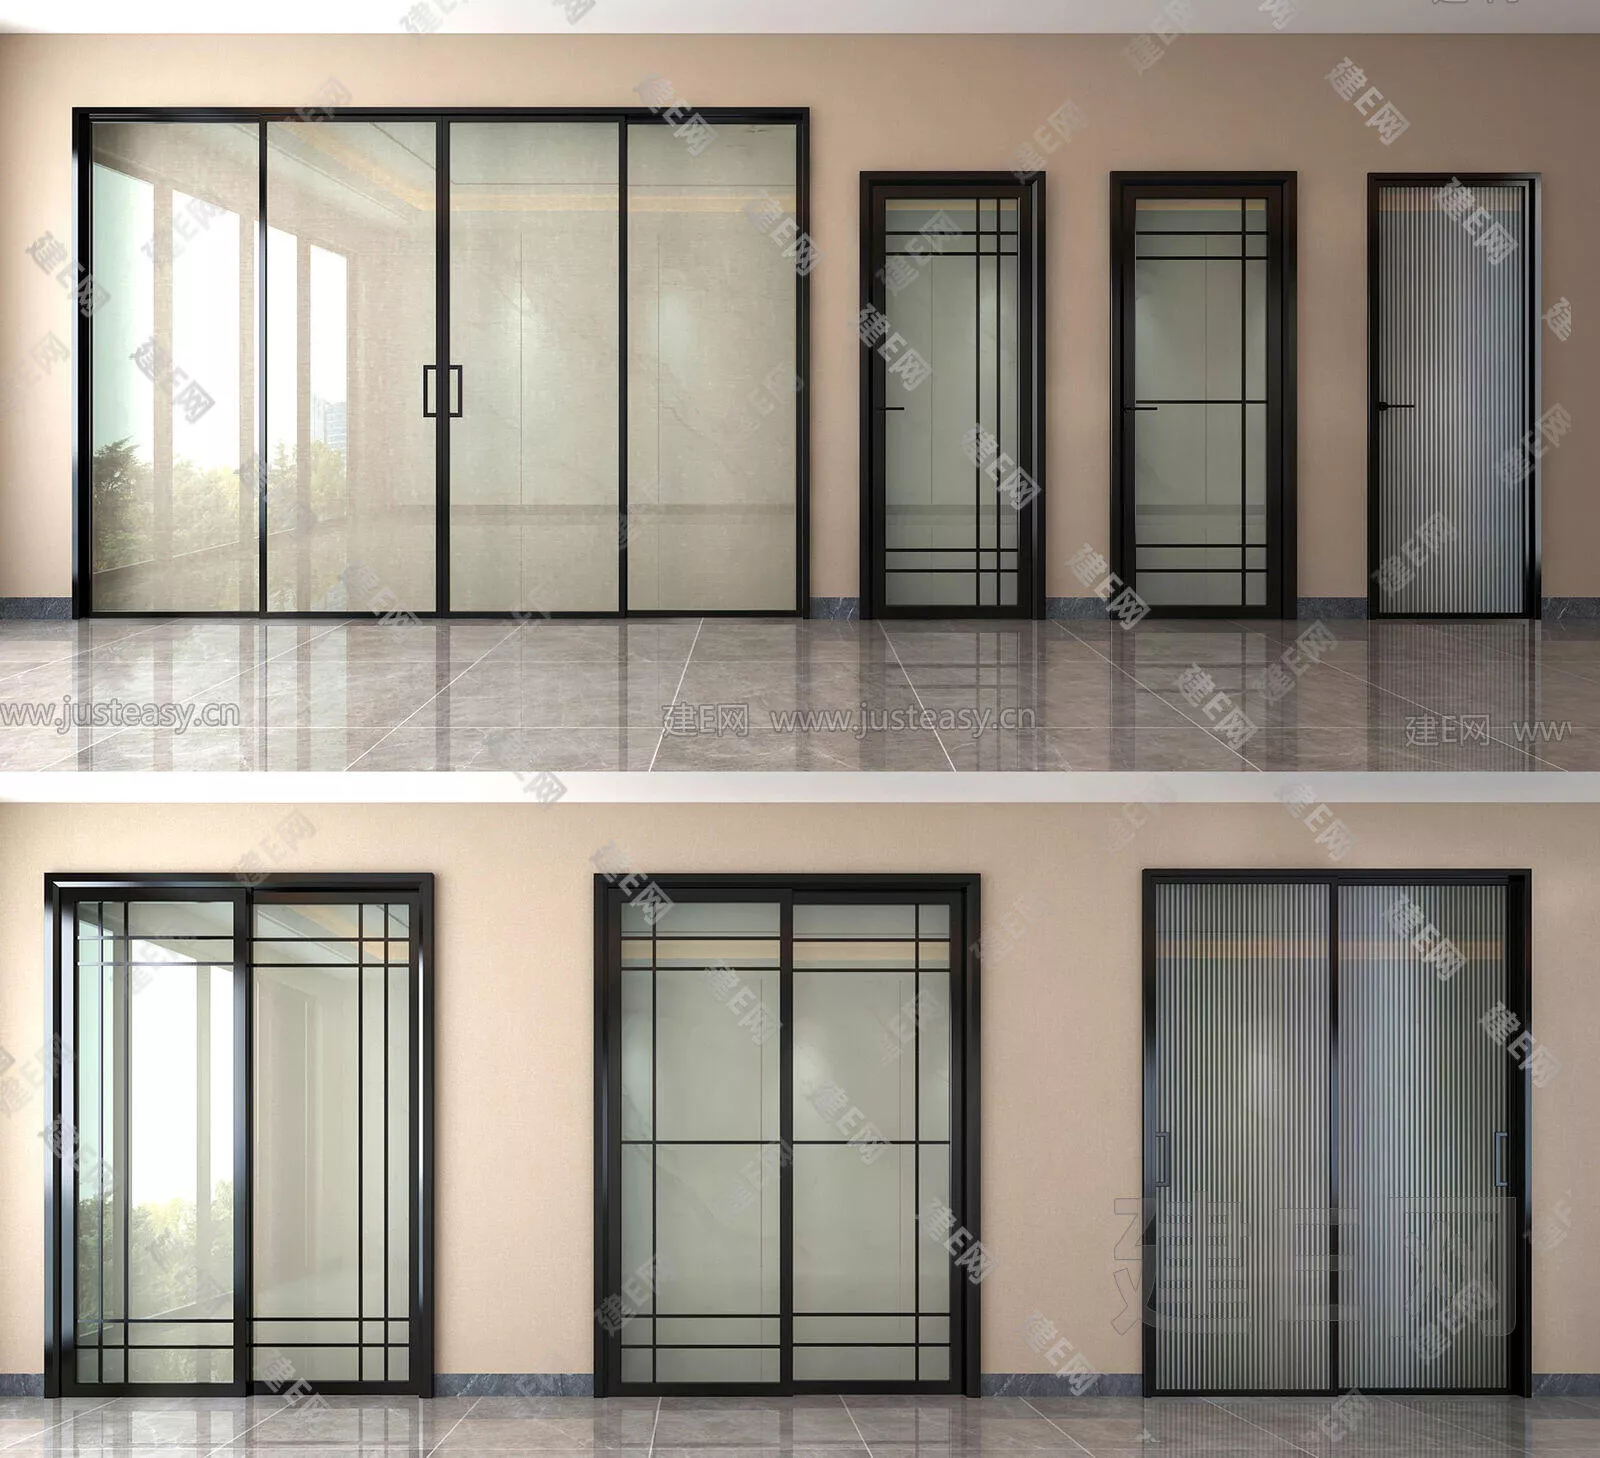 MODERN DOOR AND WINDOWS - SKETCHUP 3D MODEL - ENSCAPE - 107824198